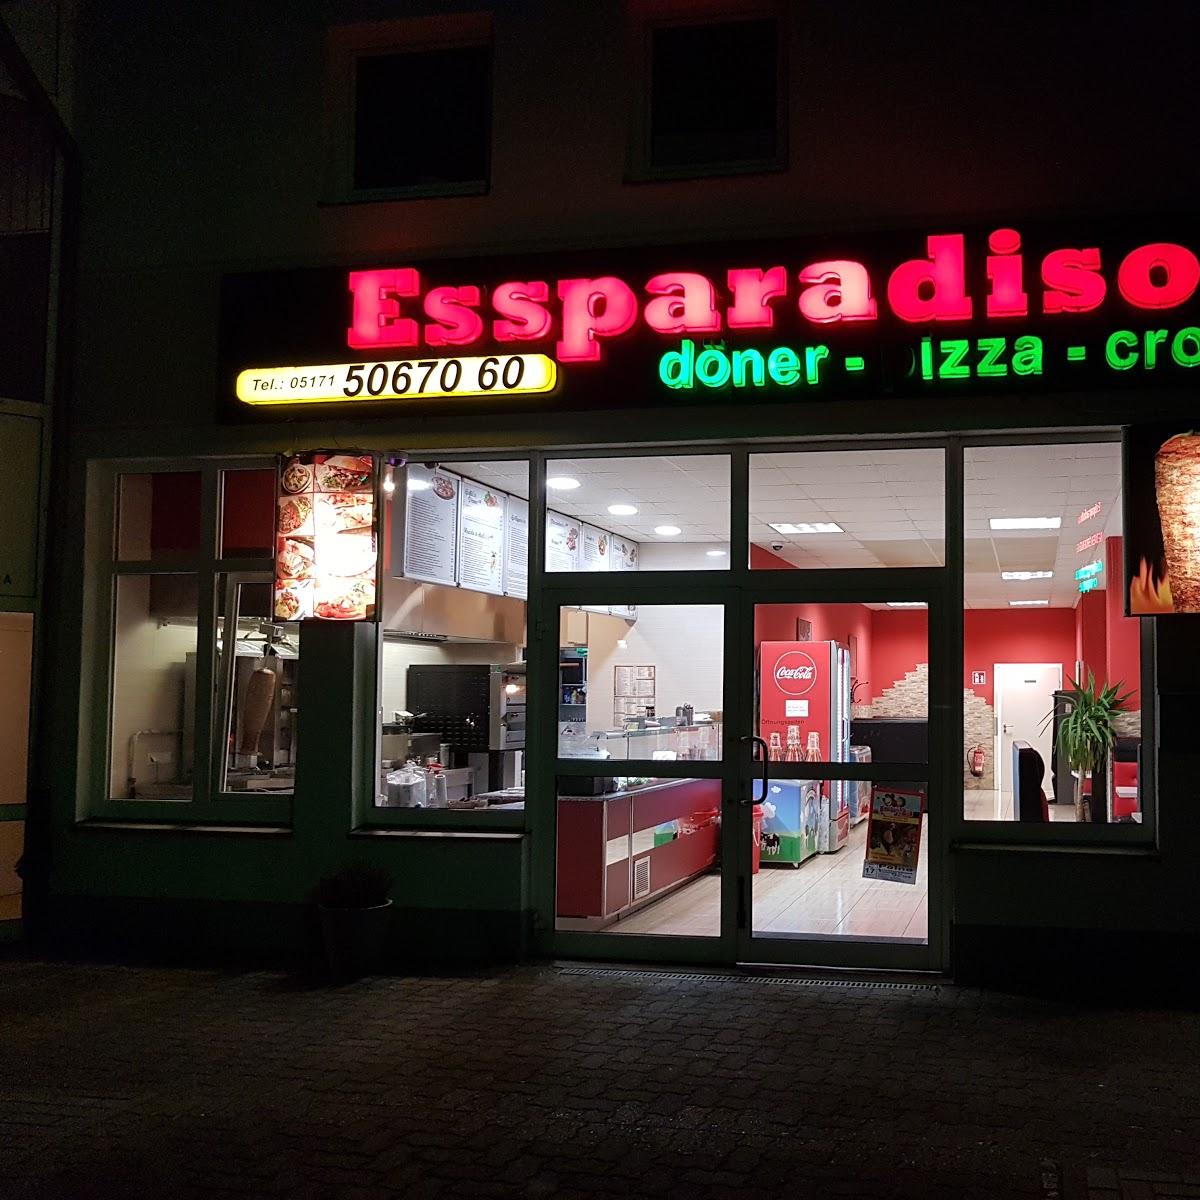 Restaurant "Essparadiso" in  Peine